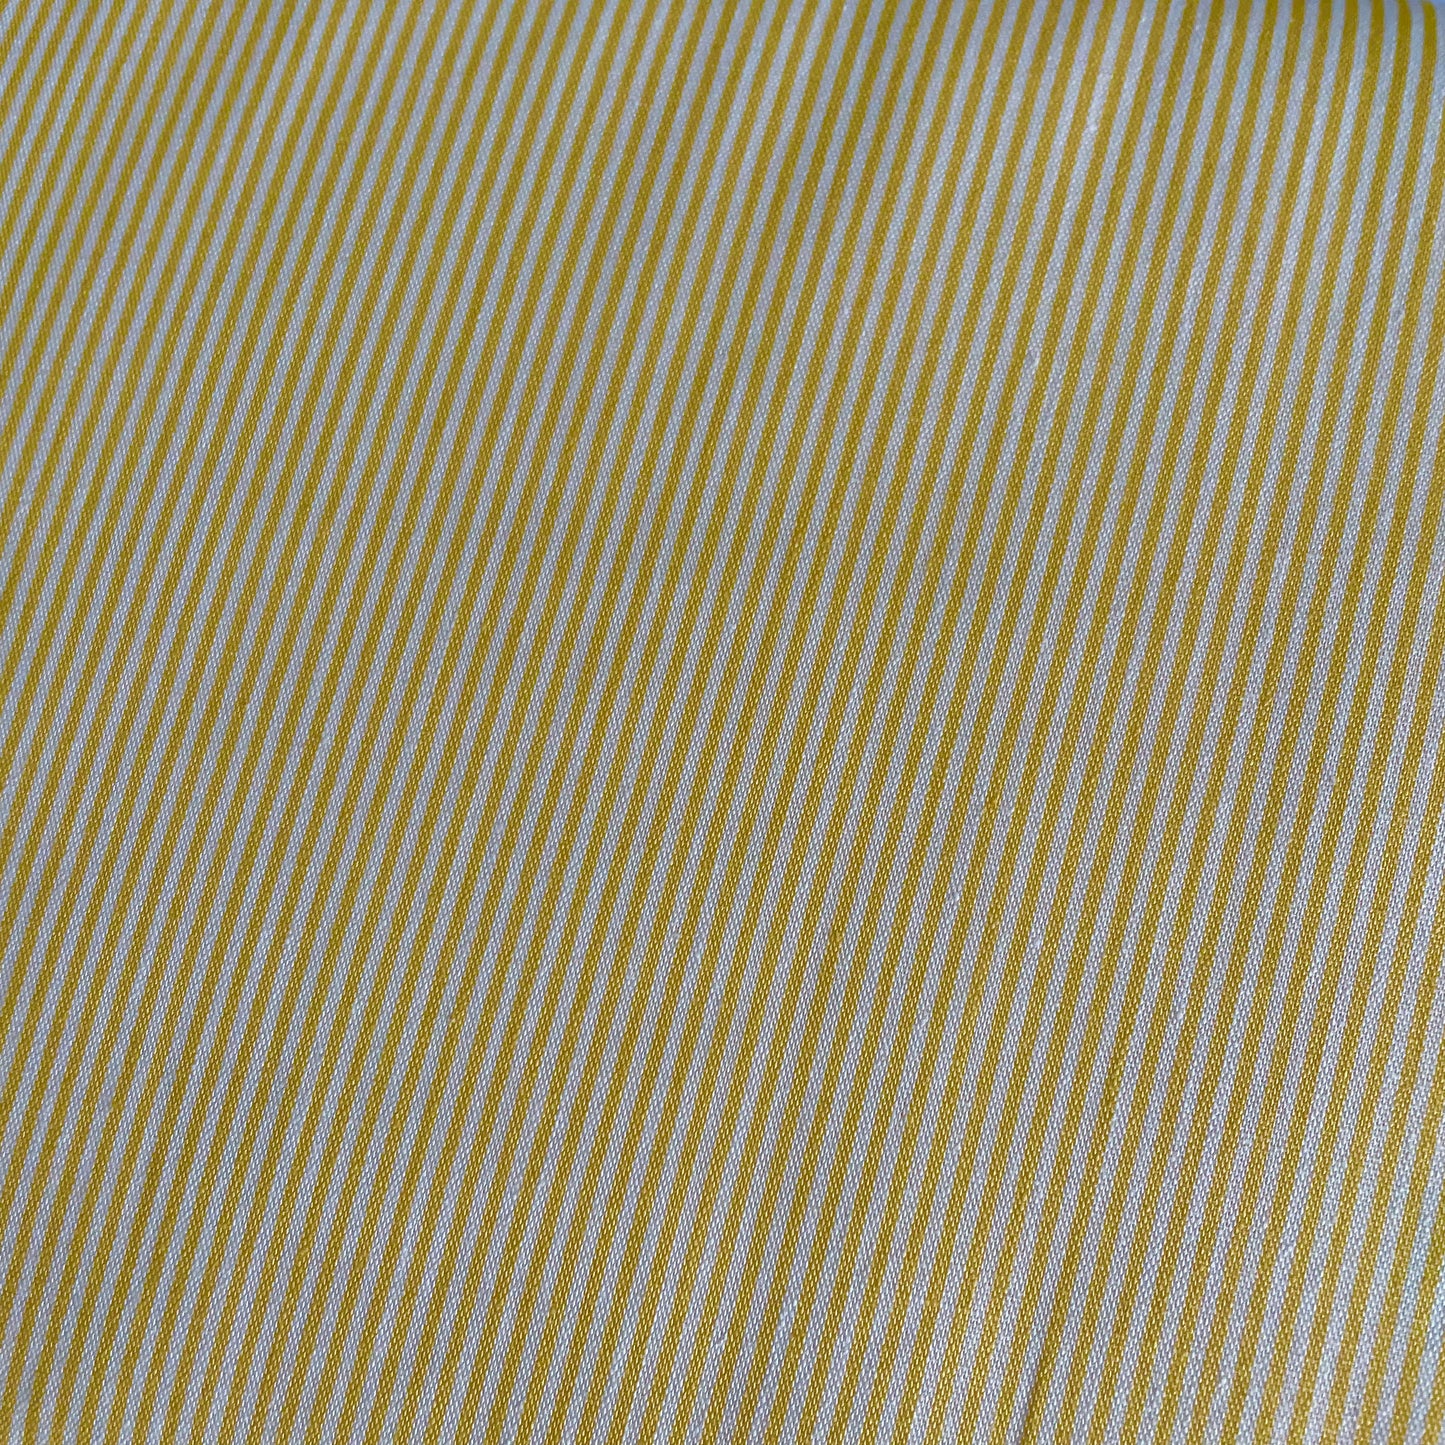 Japanese Fine Stripe - Yellow (Handworks)